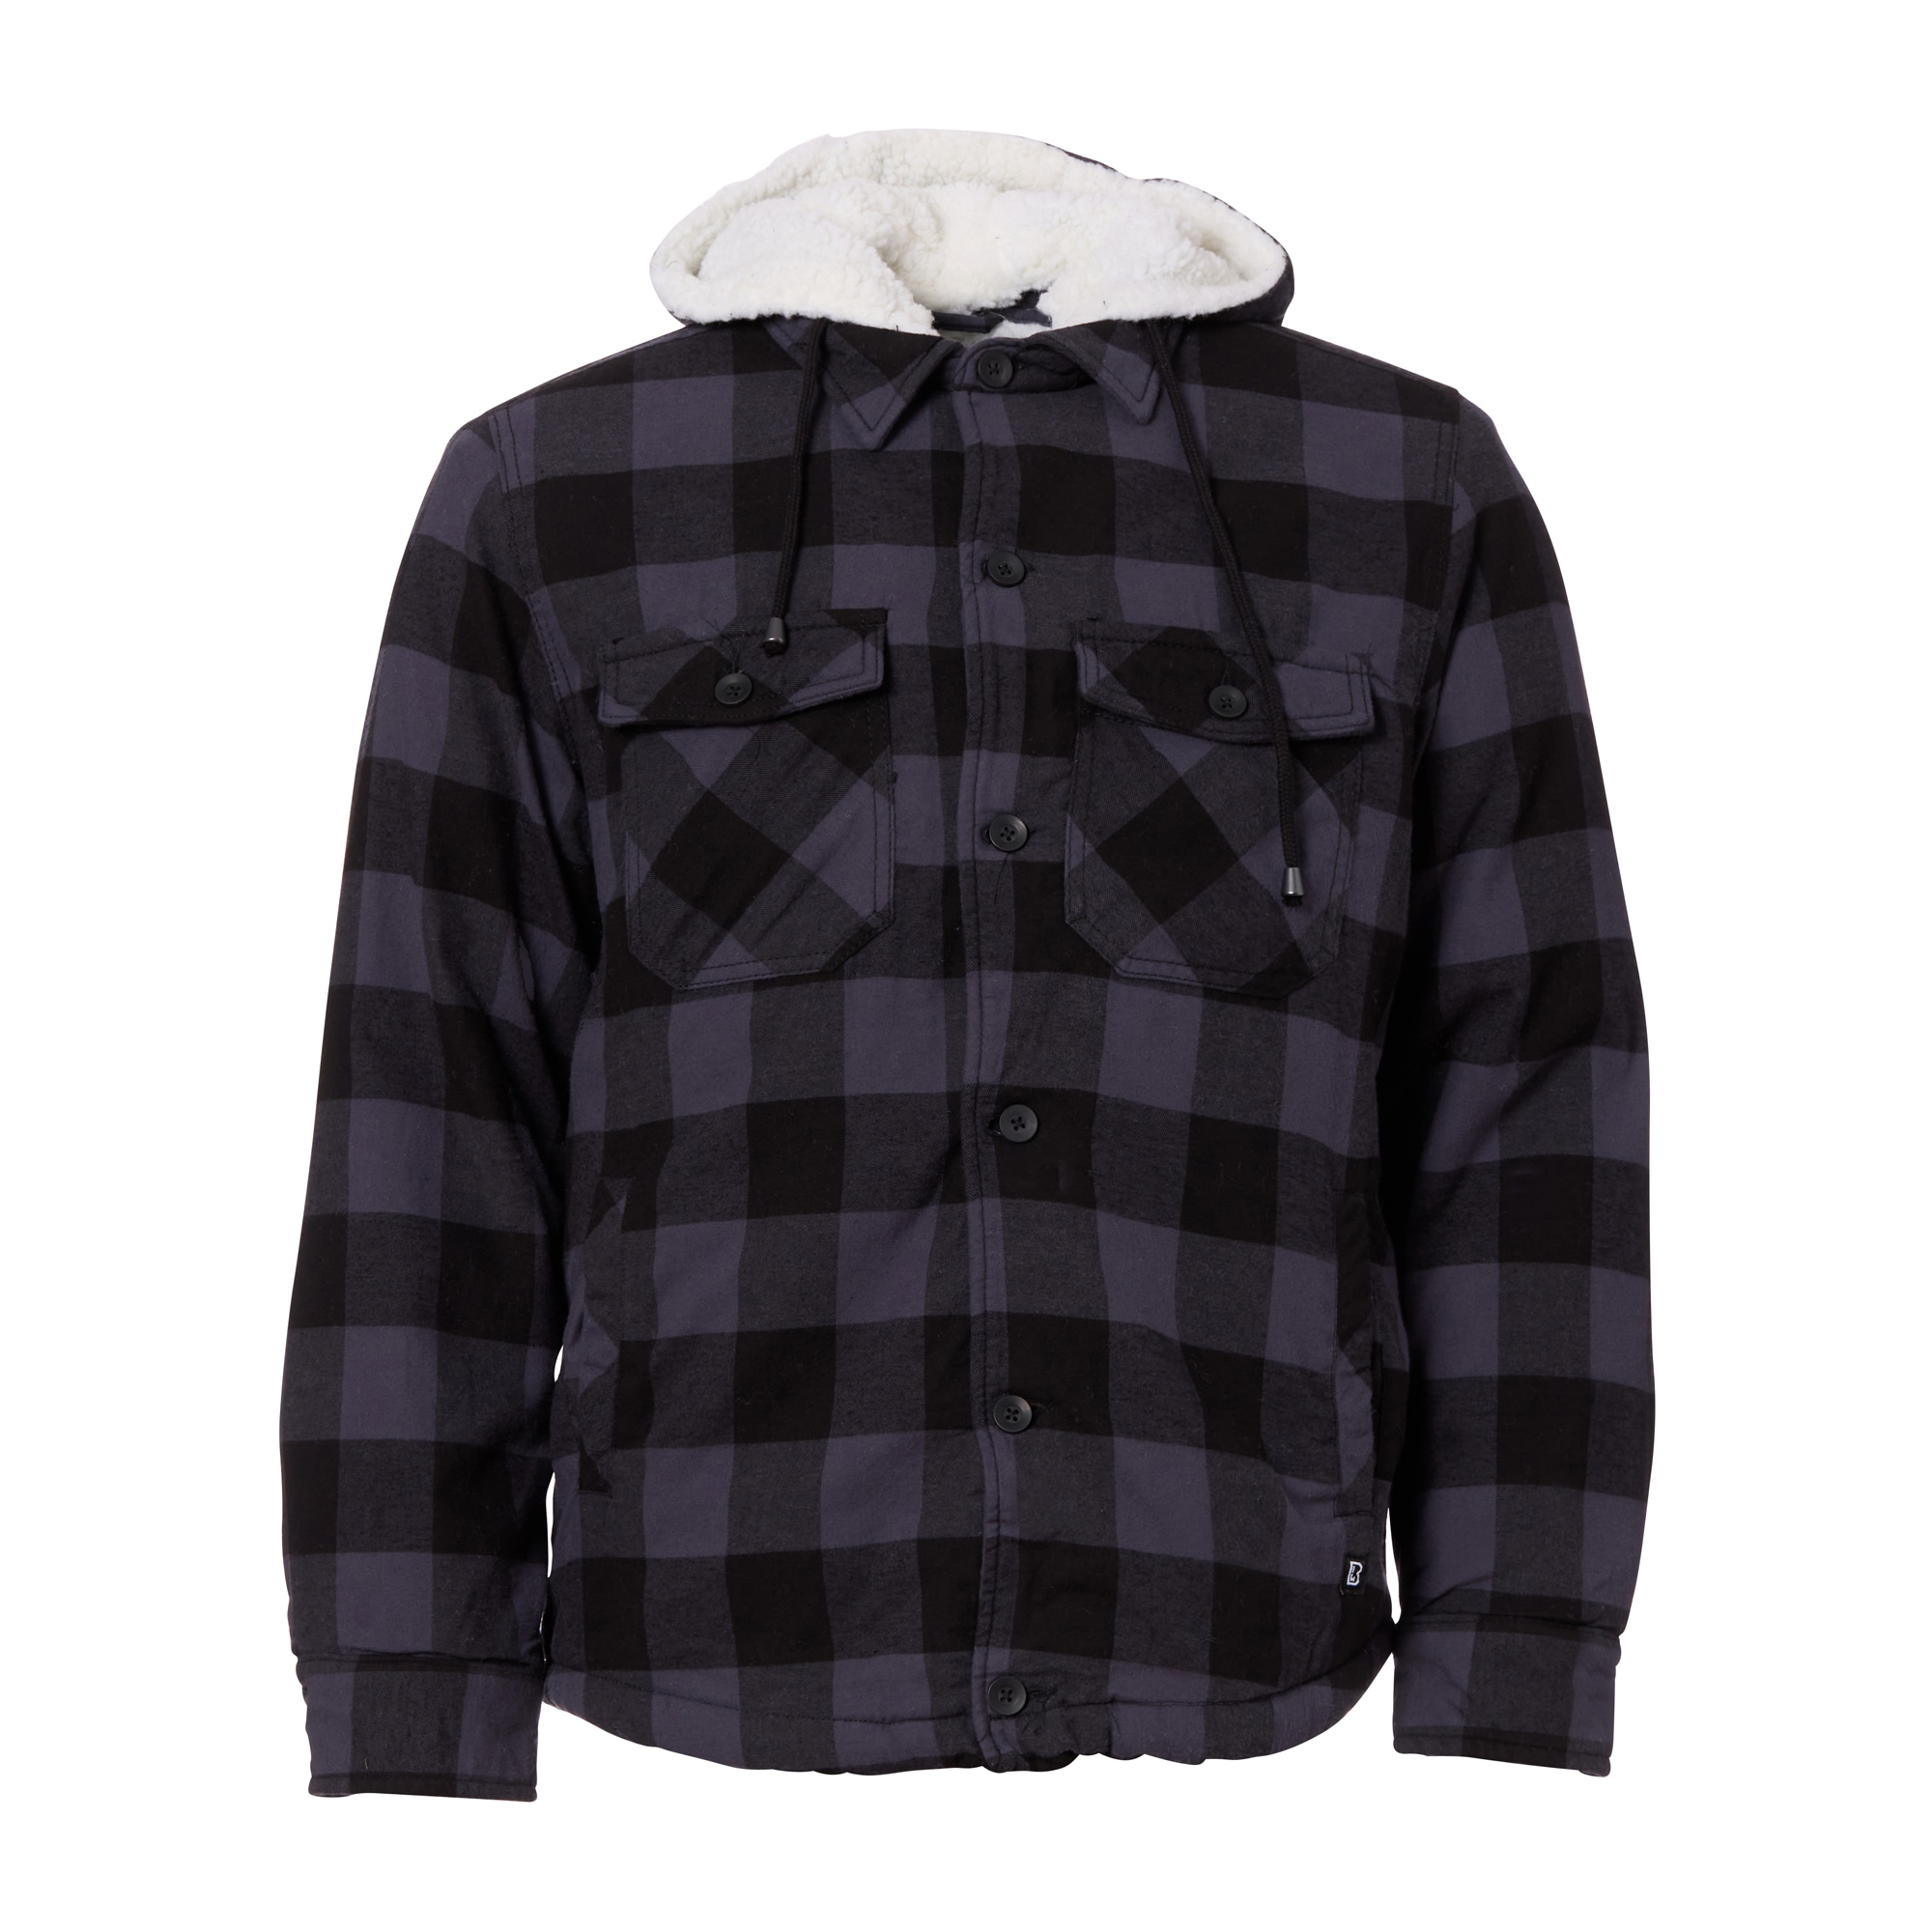 Purchase the Brandit Lumberjacket Hooded black/gray by ASMC